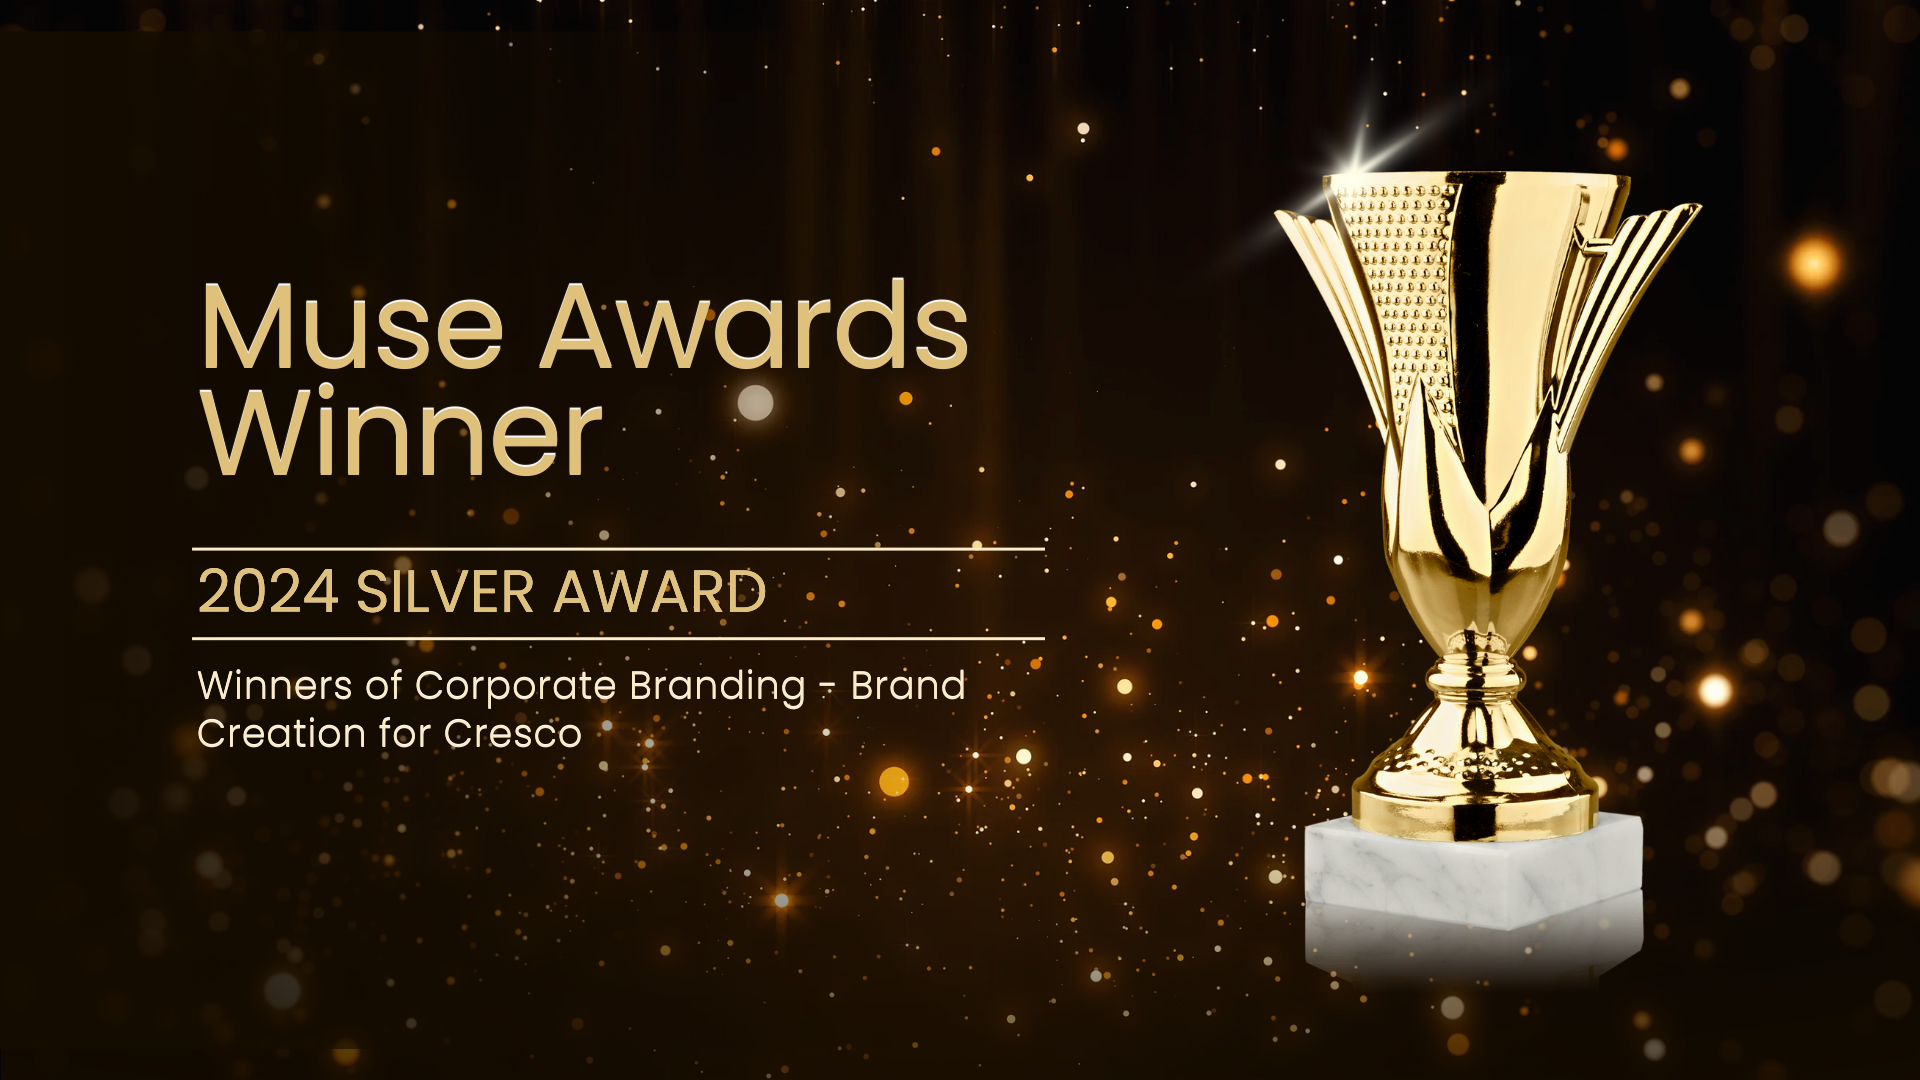 Muse Awards Winner - 2024 Silver Award. Winners of Corporate Branding - Brand Creation for Cresco.